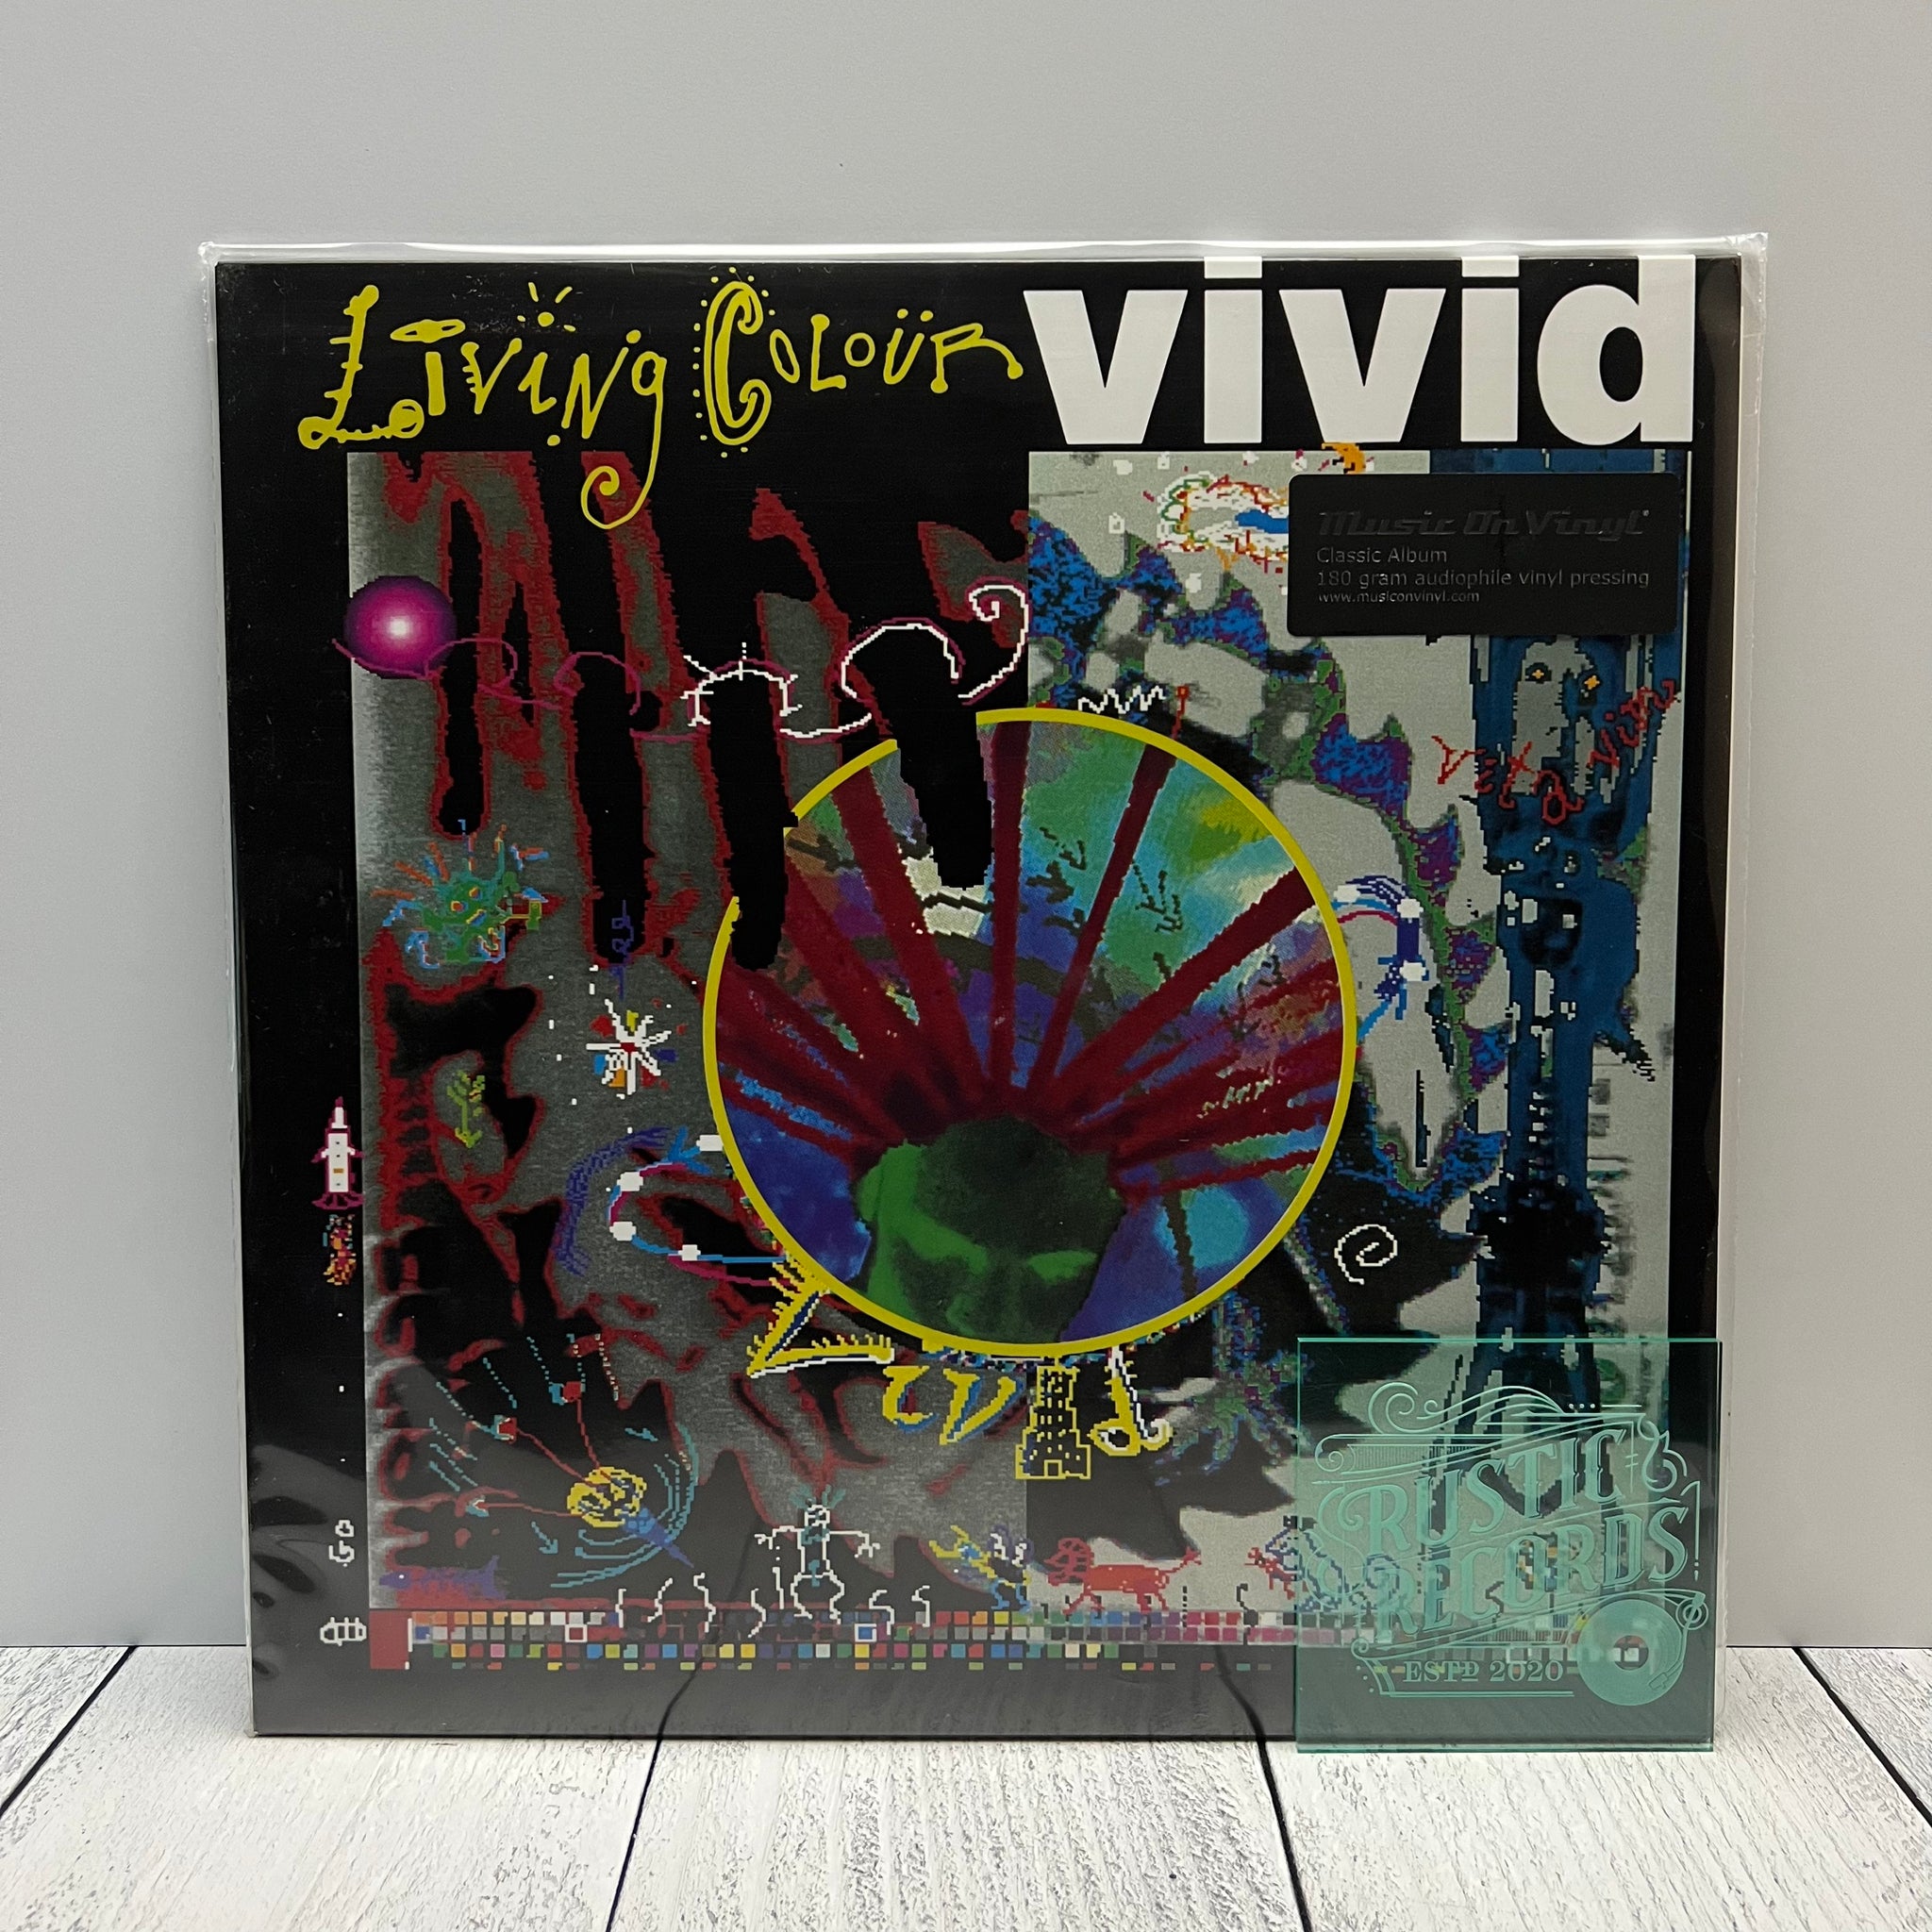 Living Colour - Vivid (Music On Vinyl)